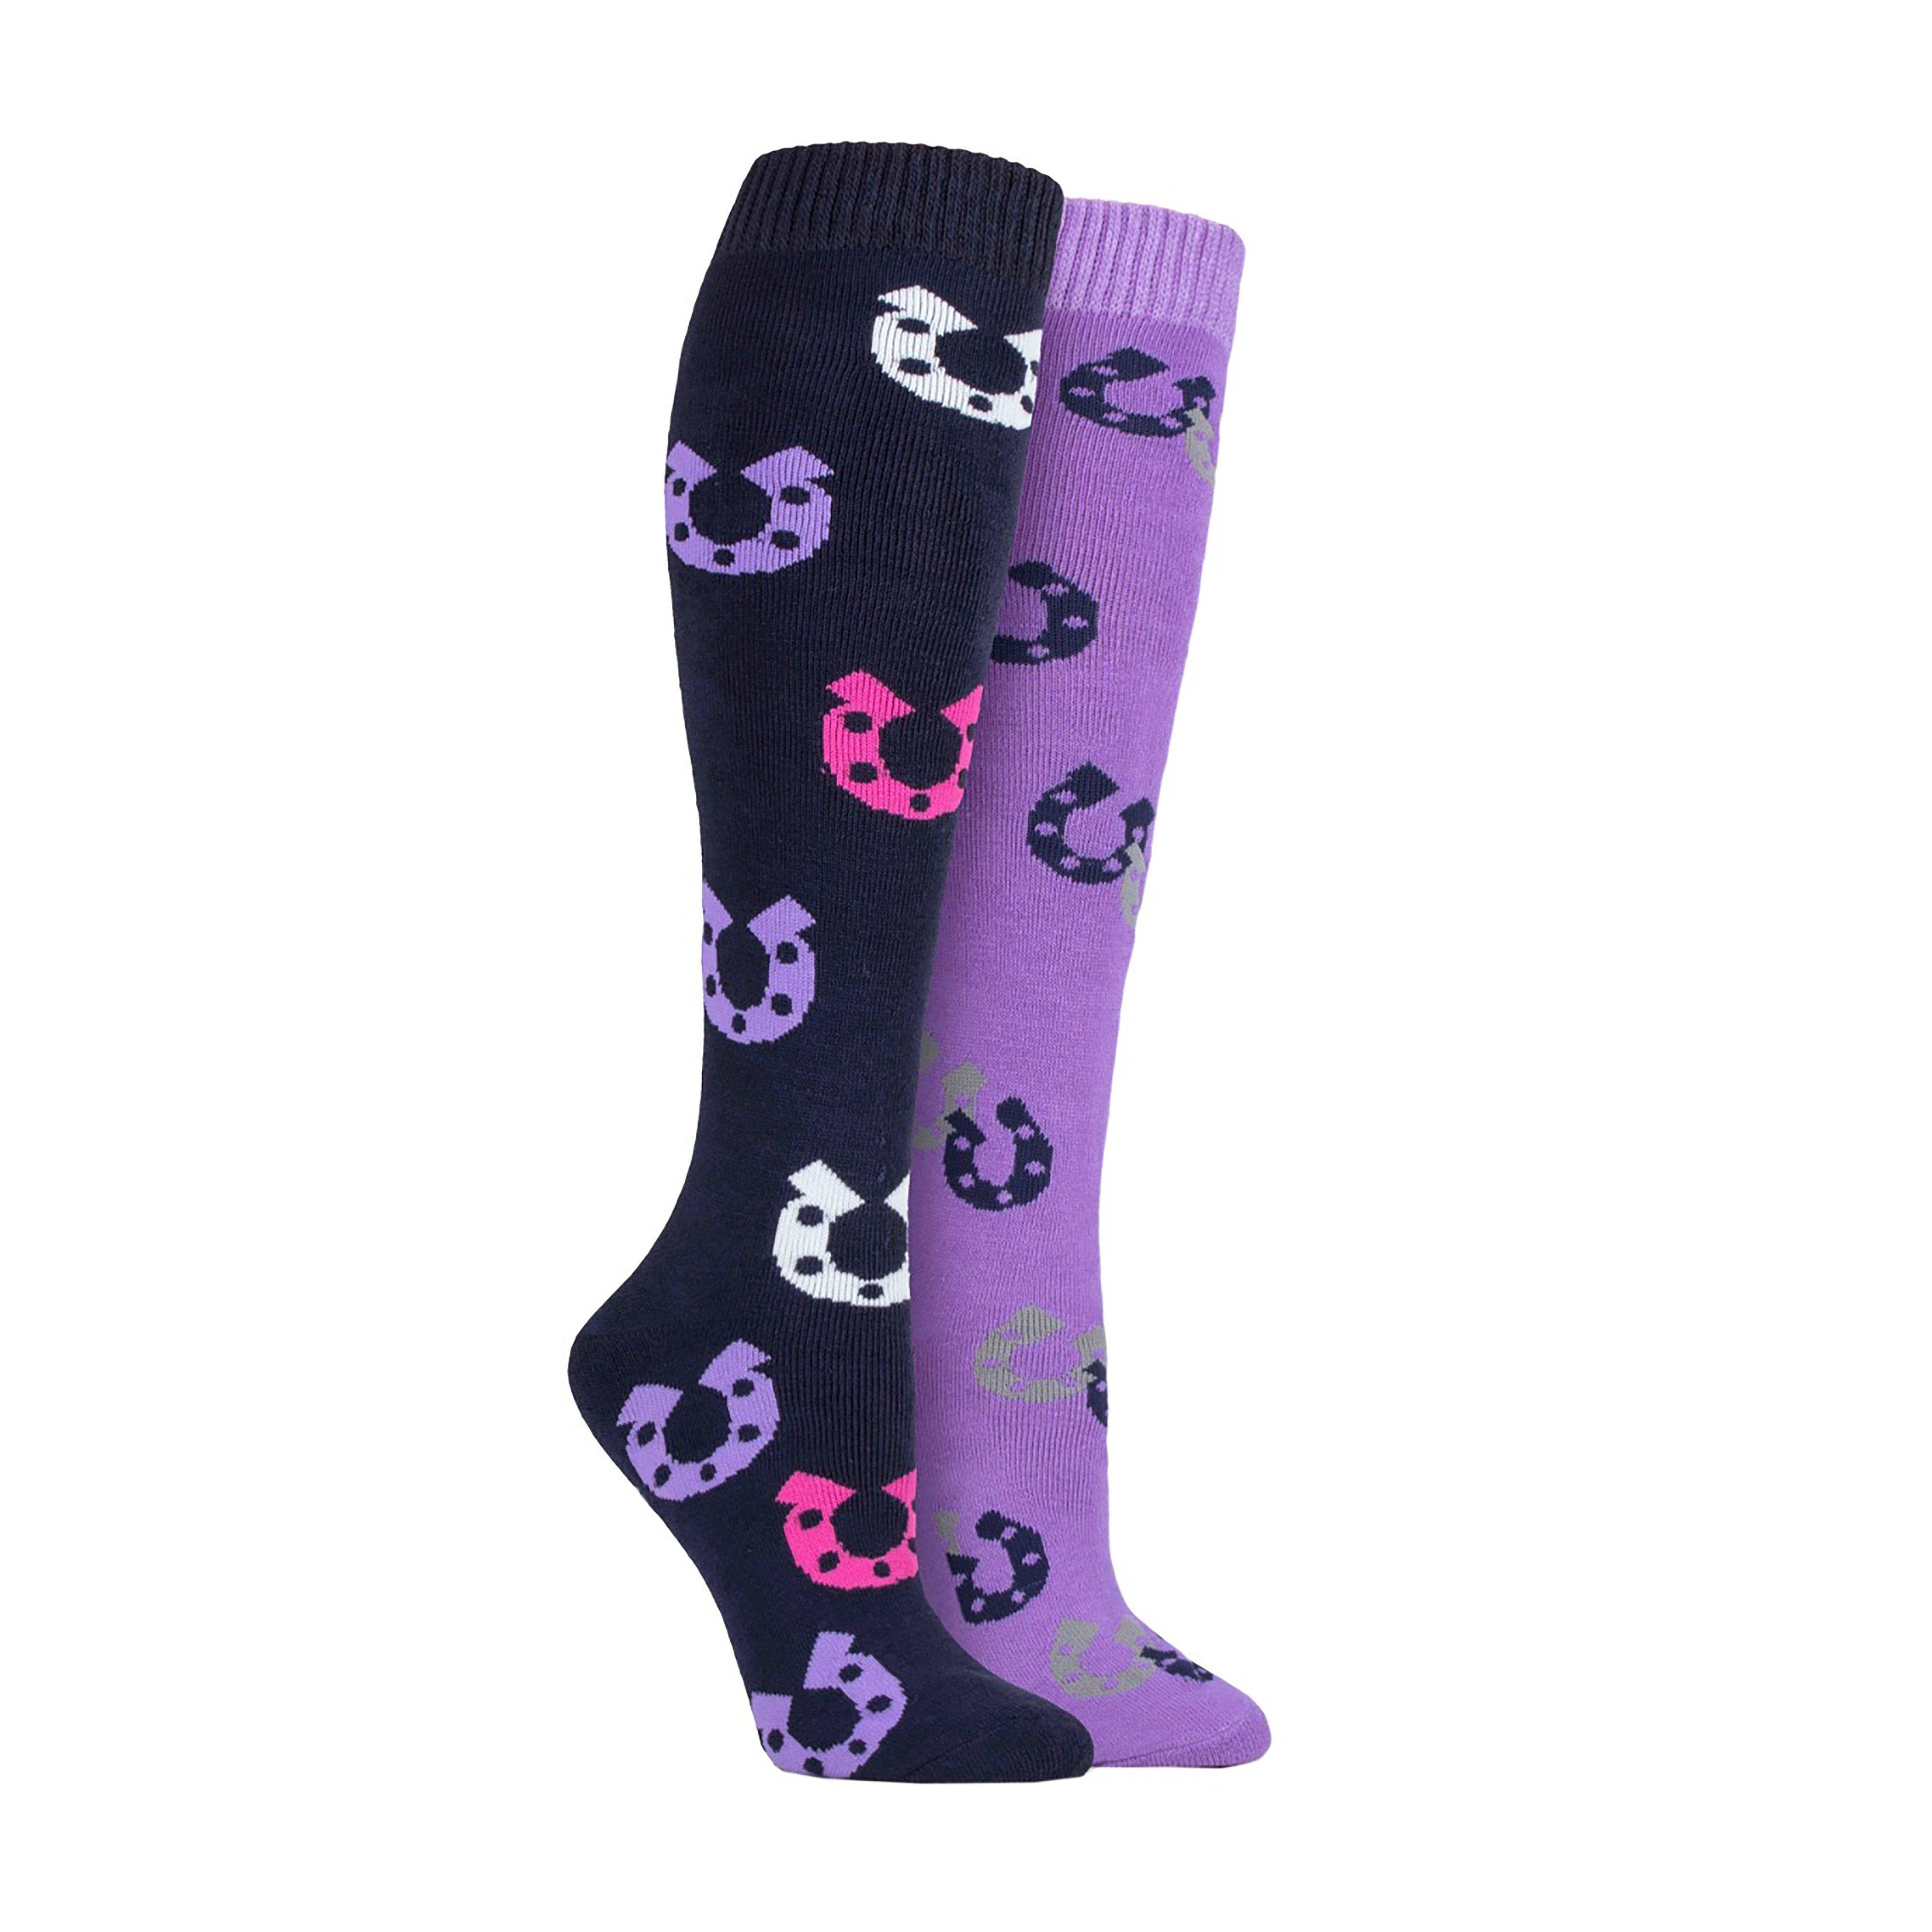 StormBloc Womens Horseshoe 2 Pack Socks Navy/Lilac